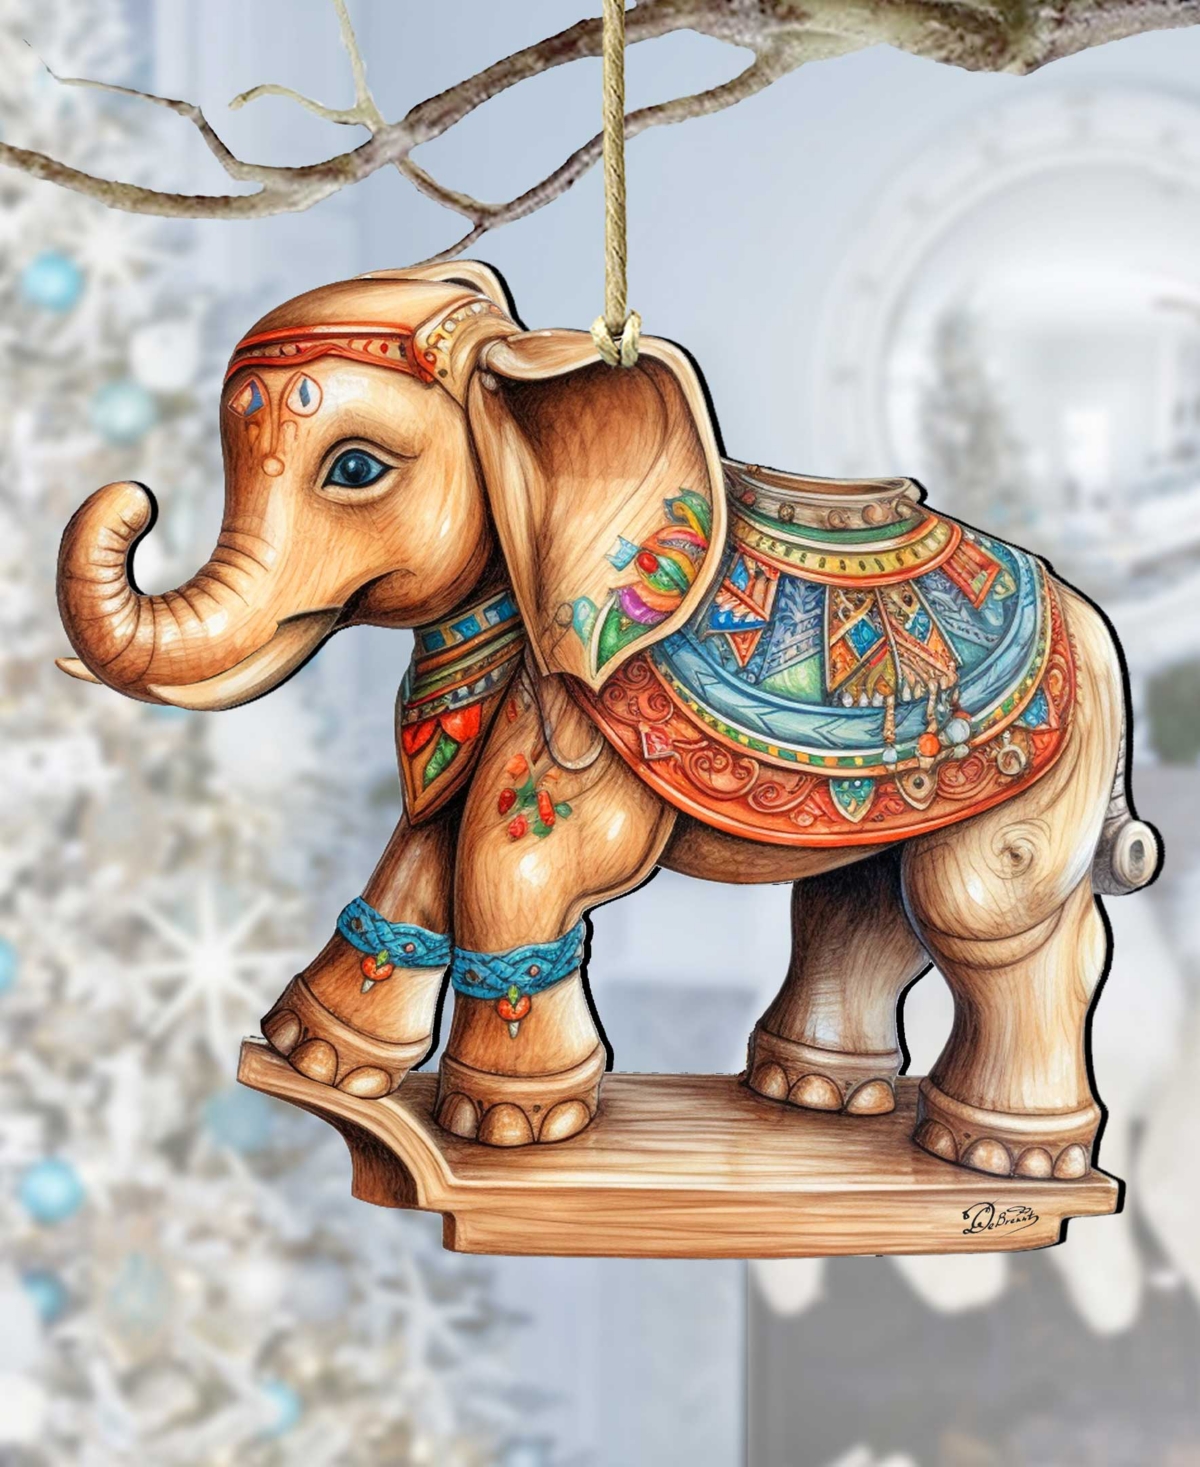 Designocracy Carousel Elephant Christmas Wooden Ornaments Holiday Decor G. Debrekht In Multi Color